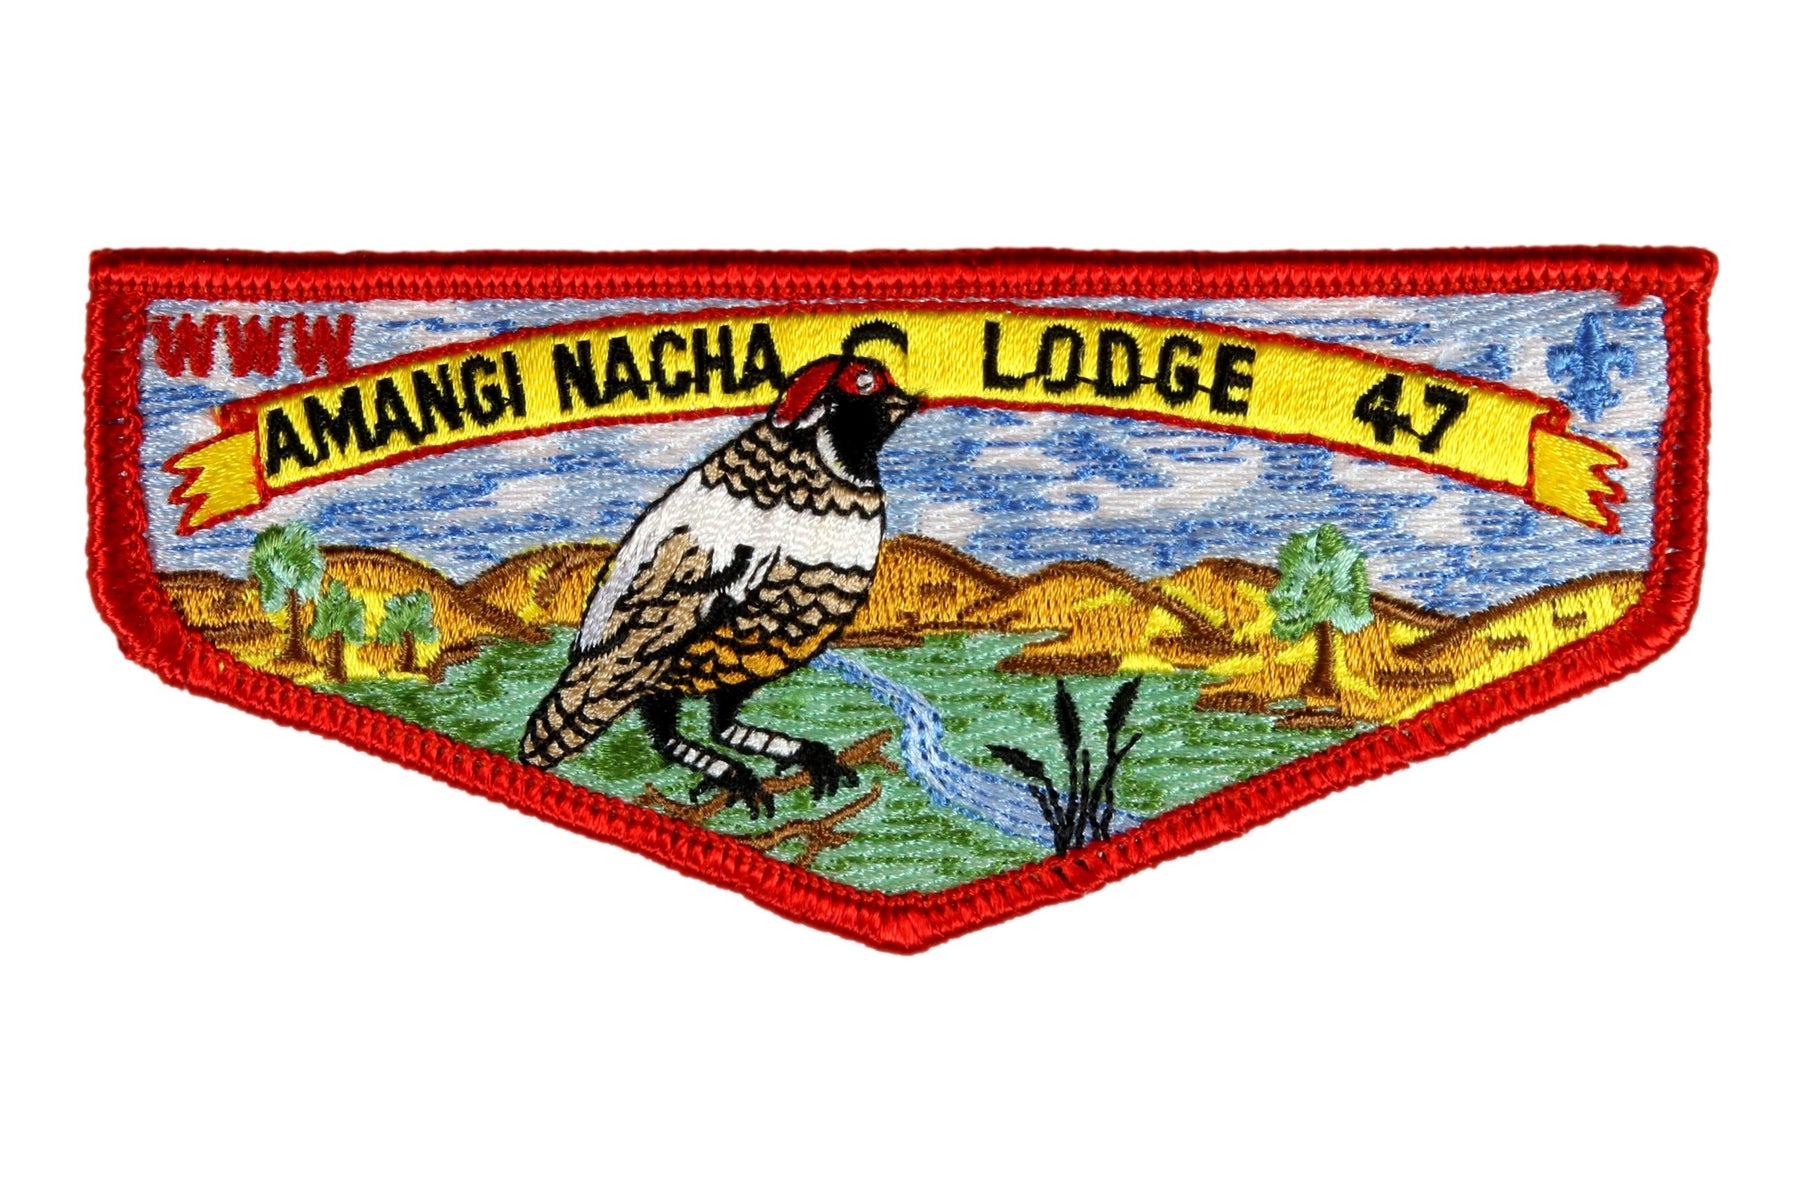 Lodge 47 Amangi Nacha Flap S-3